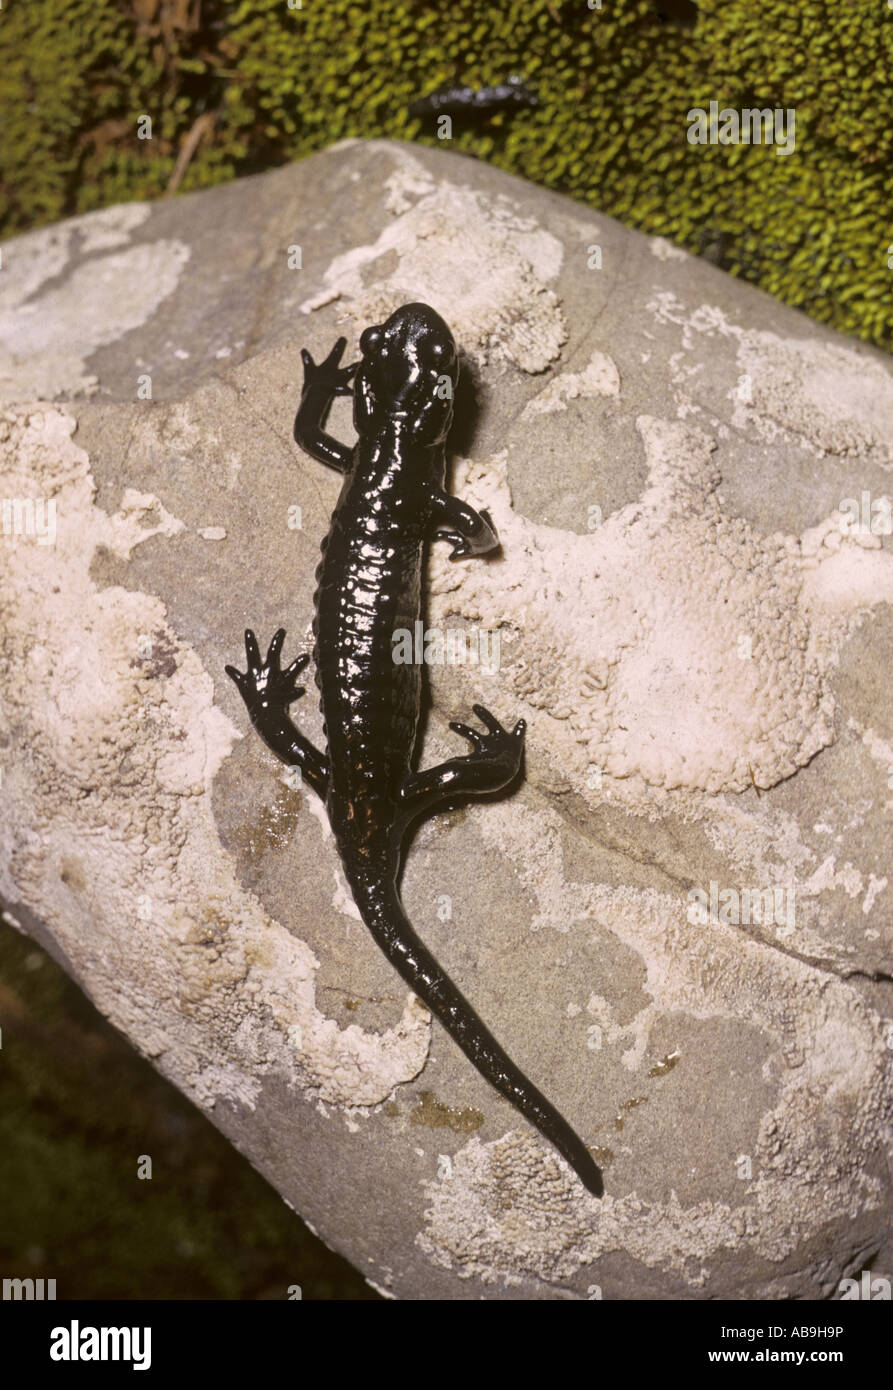 Alpine salamander, European Alpine salamander (Salamandra atra), on stone Stock Photo